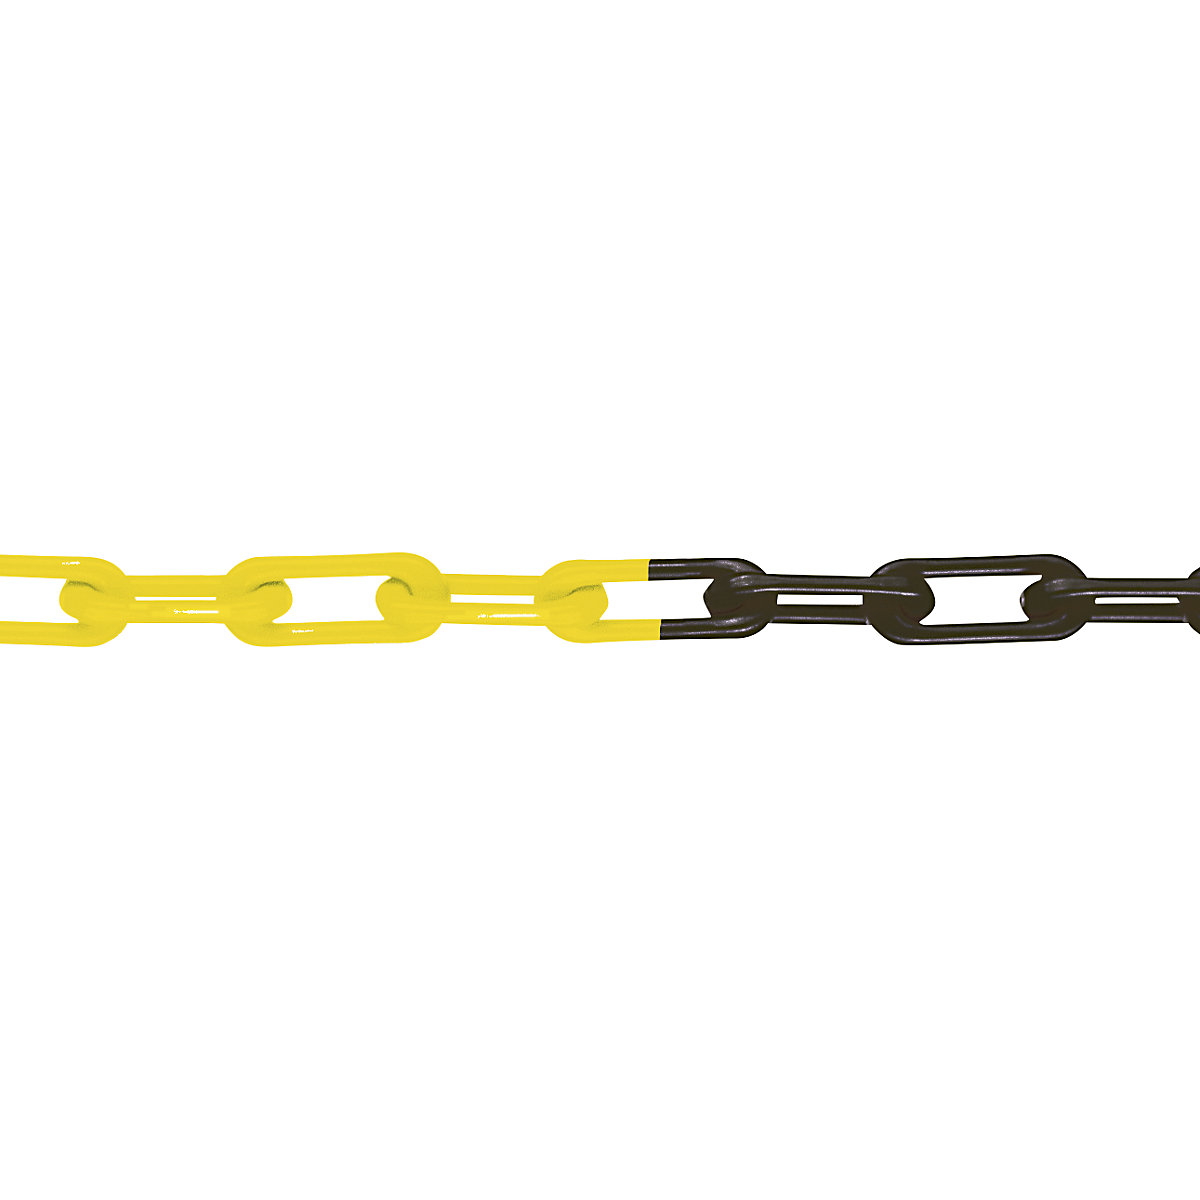 Nylon-kwaliteitsketting, MNK-kwaliteit 6, lengte 50 m, zwart-geel, vanaf 10 stuks-5